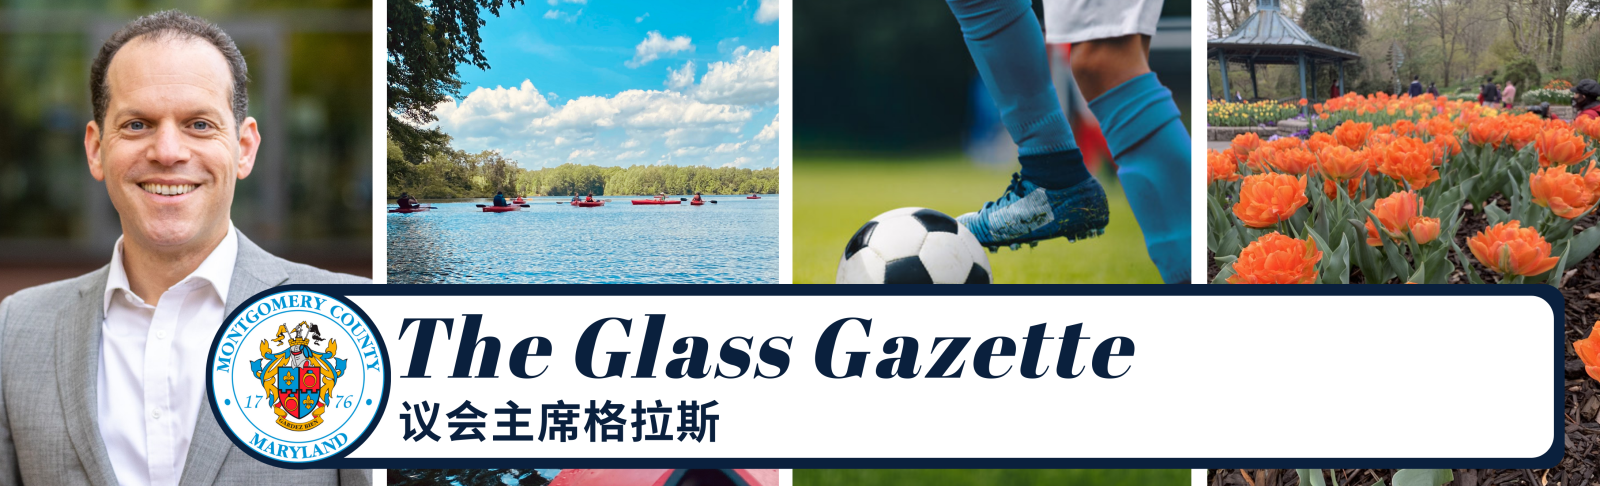 Glass Gazette - Chinese Banner